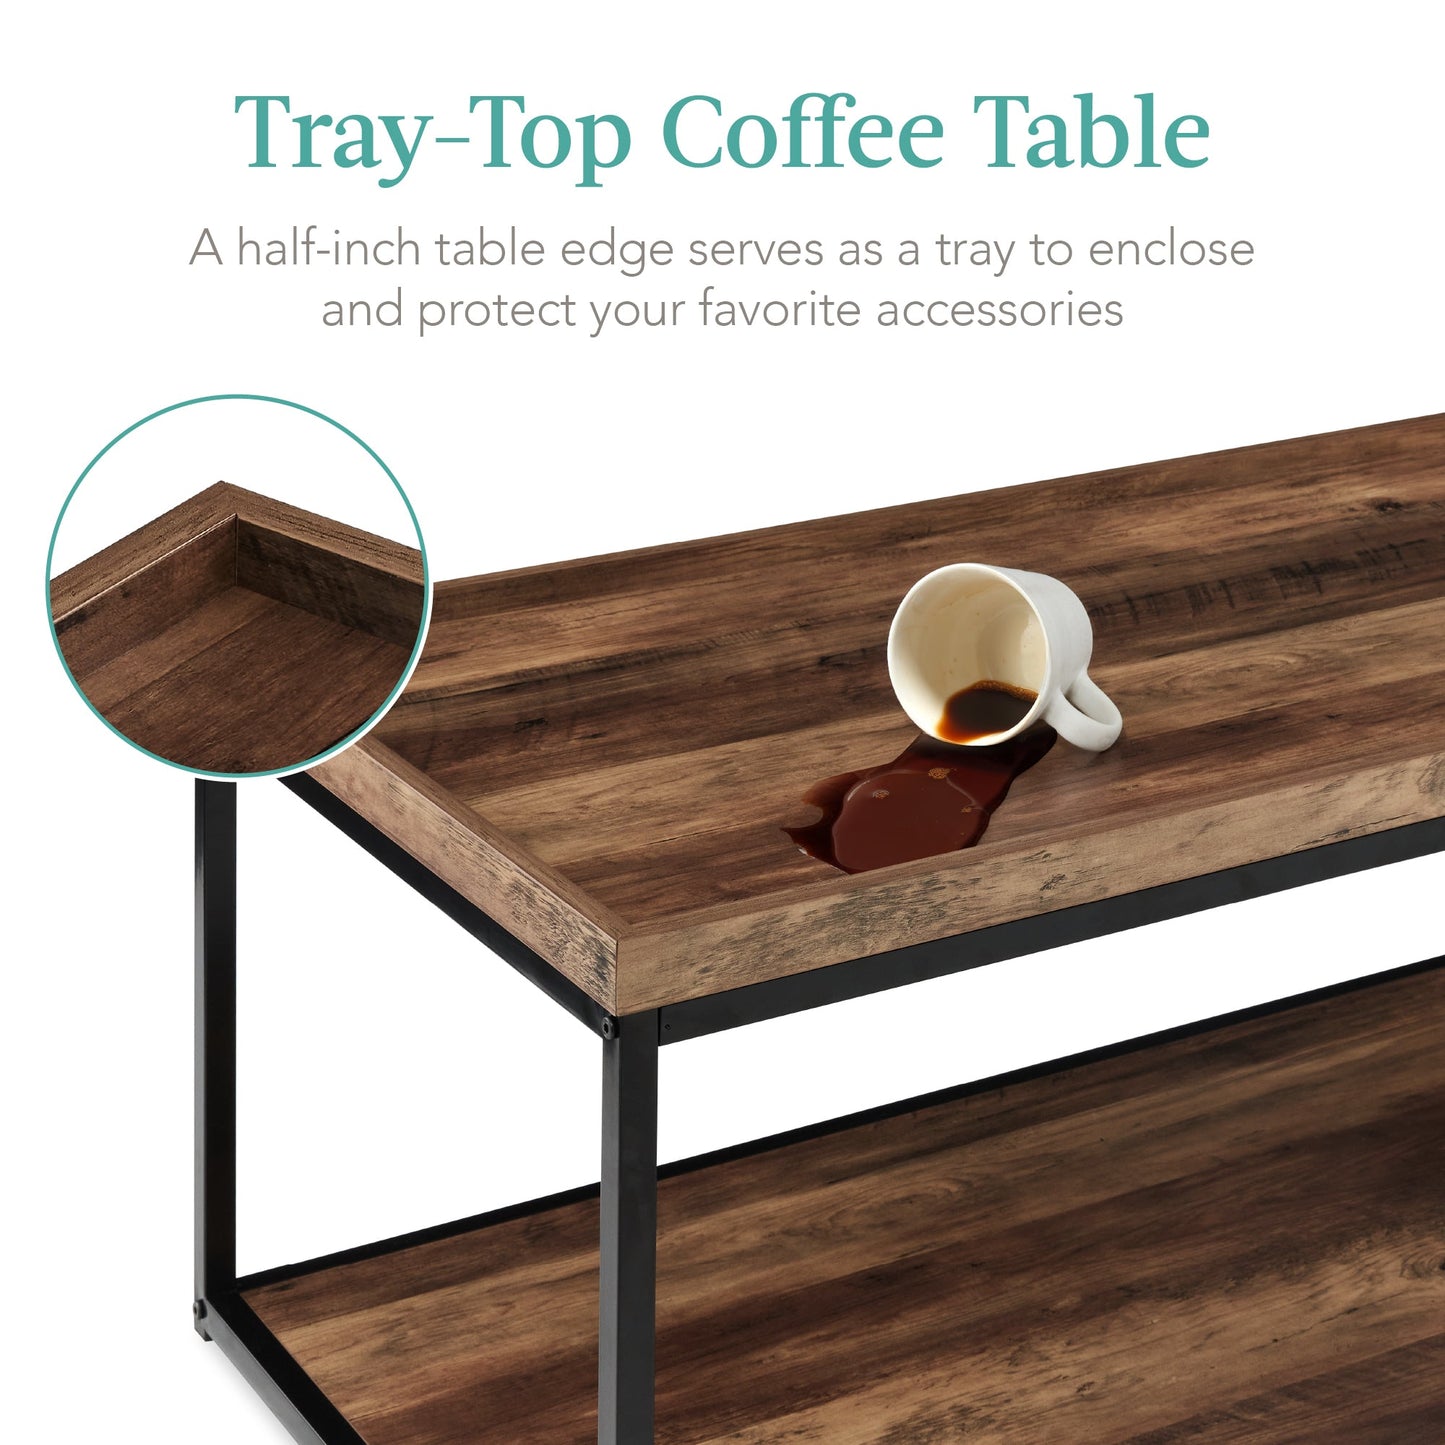 2-Tier Rectangular Tray Top Coffee Table w/ Metal Frame, Shelf - 44in